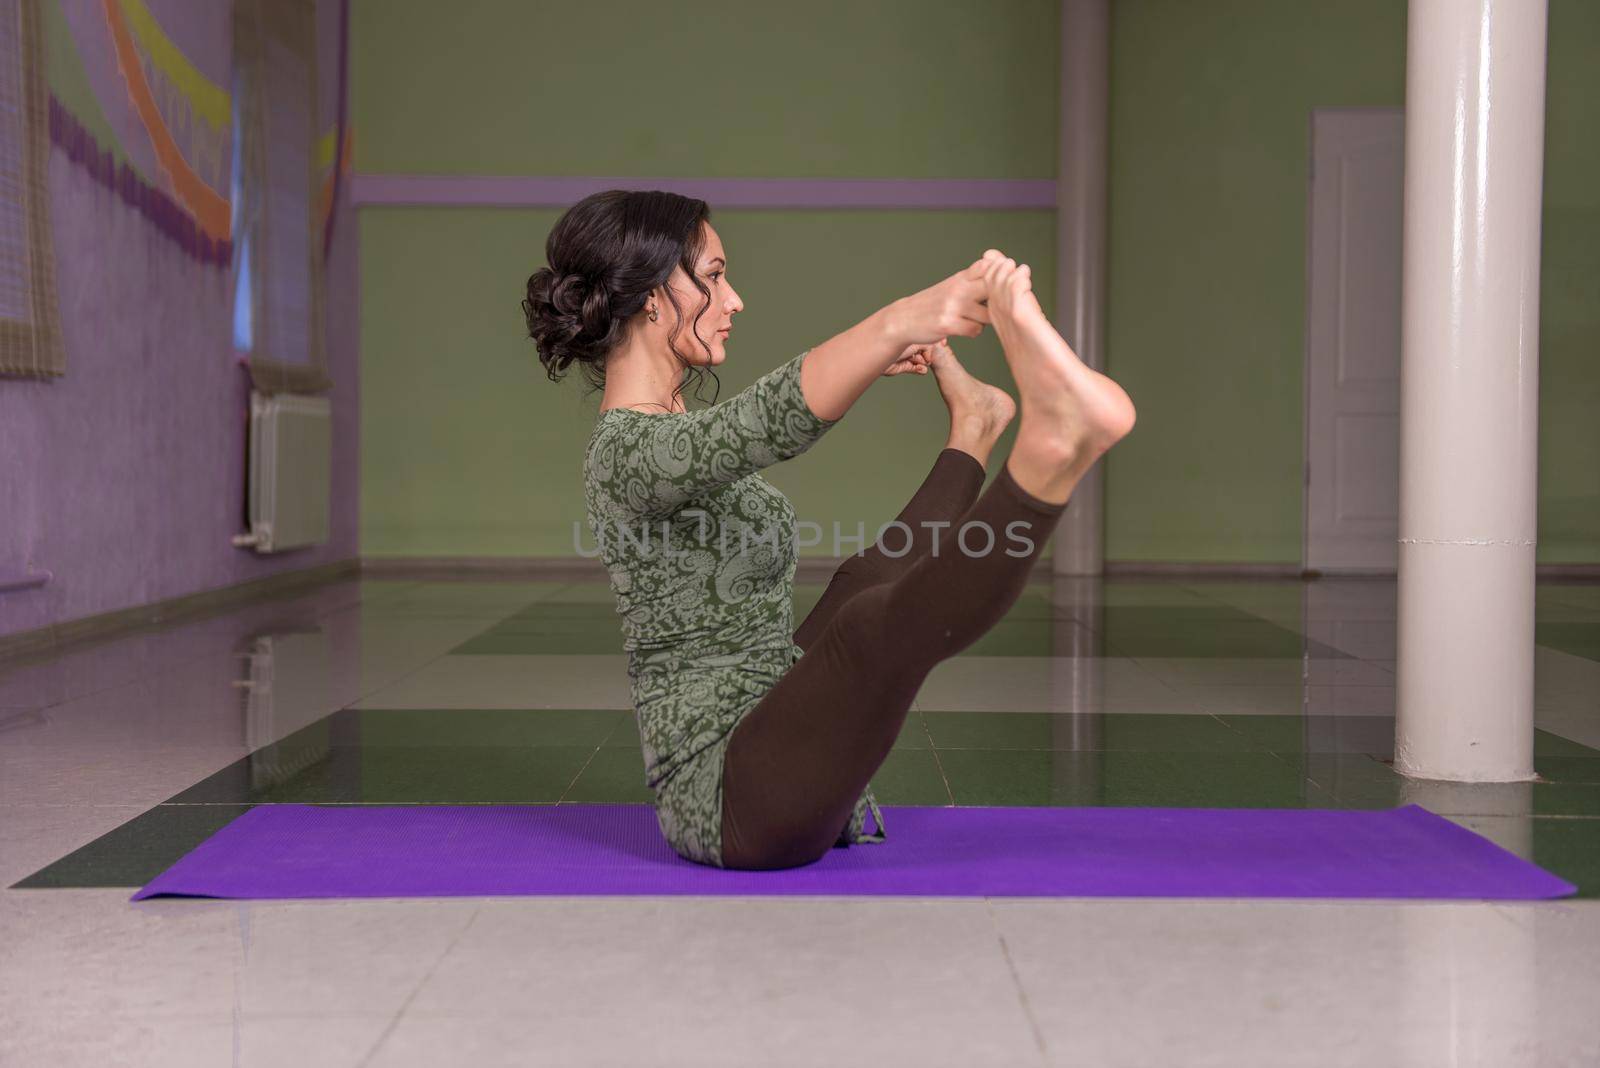 Professional yoga trainer practices yoga lesson in the gym./Yogi teaches yoga lesson in a studio.